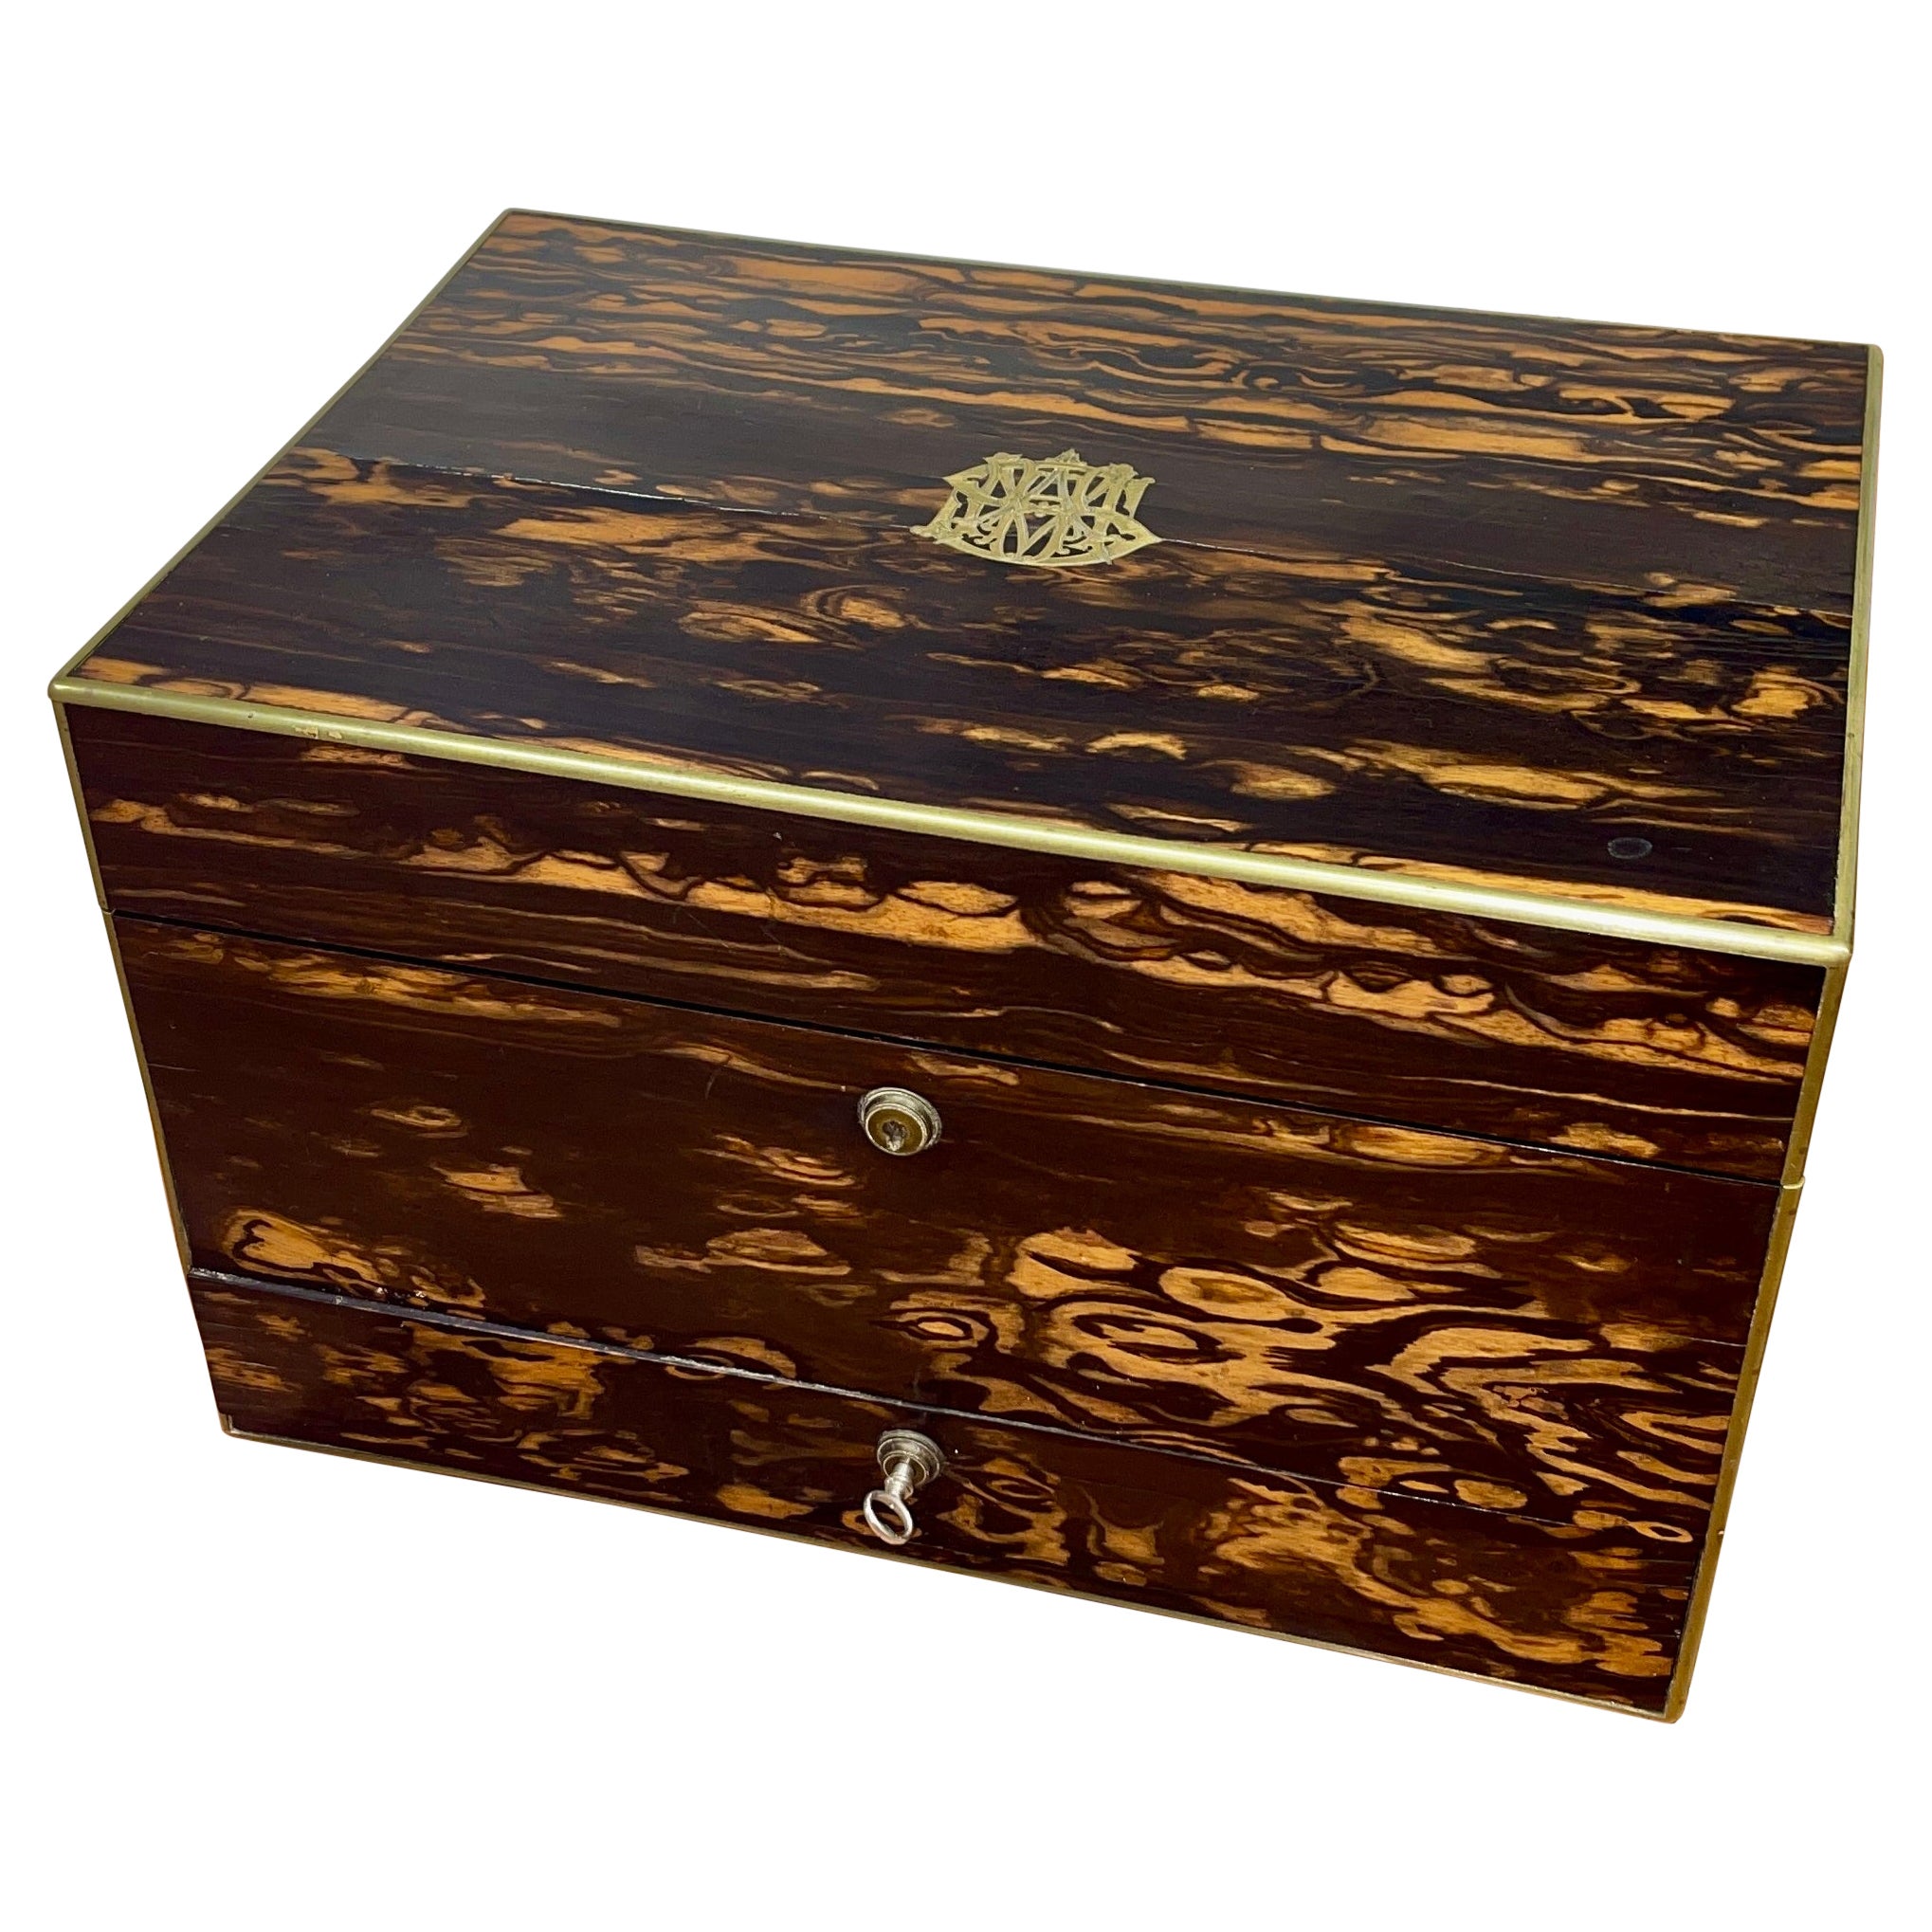 George Betjemann & Sons 19th Century Calamander Box 